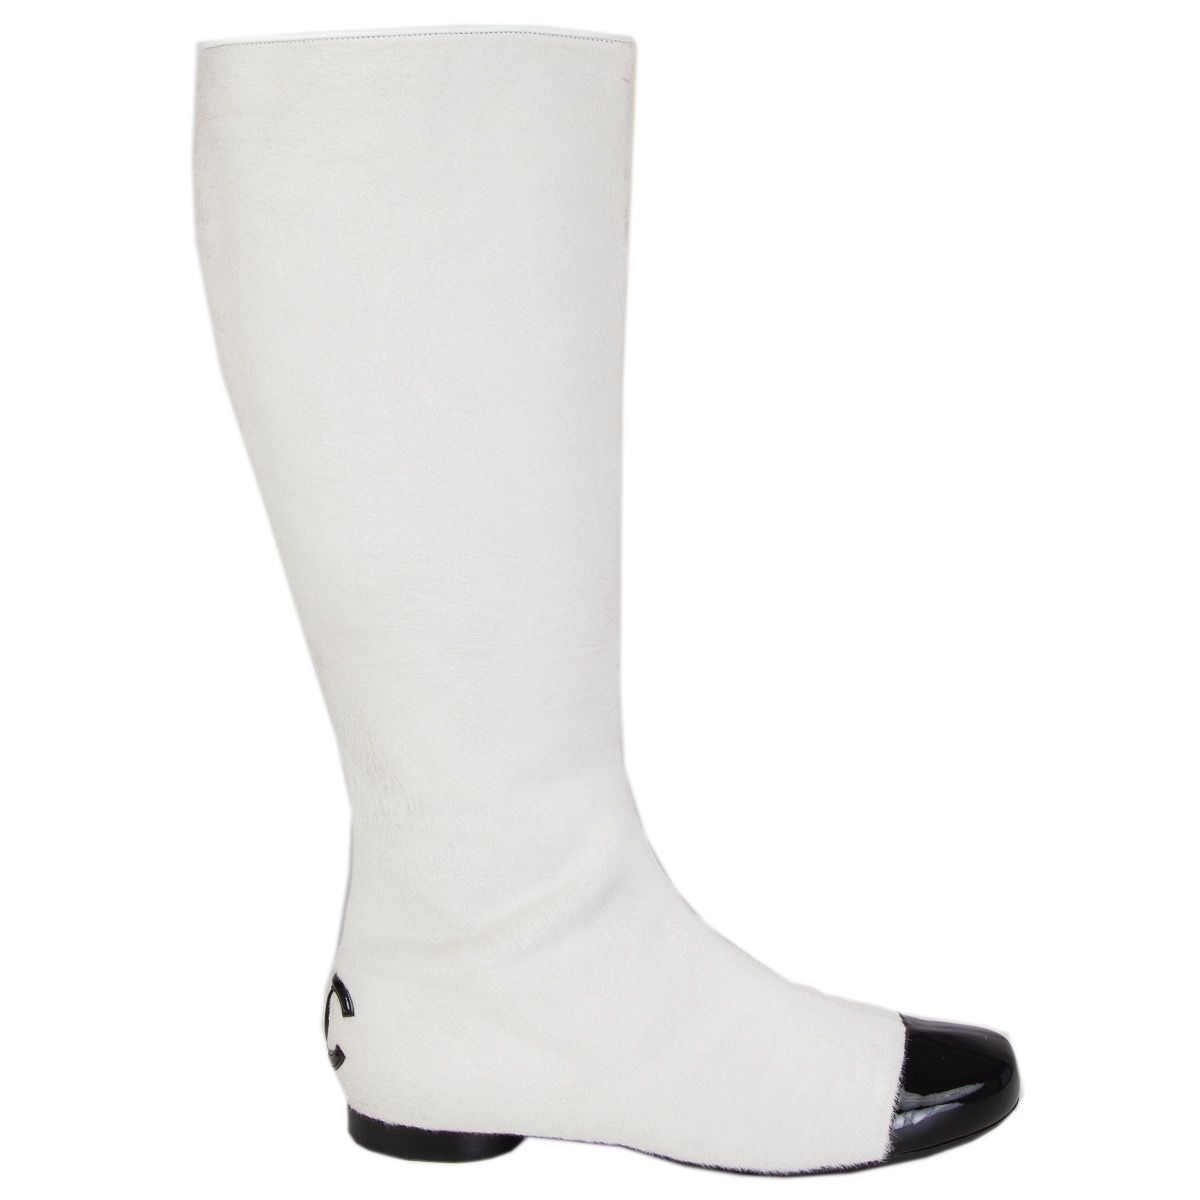 Chanel Thigh High Rubber Rain Boots Black  G39625 X56326 K5255  US